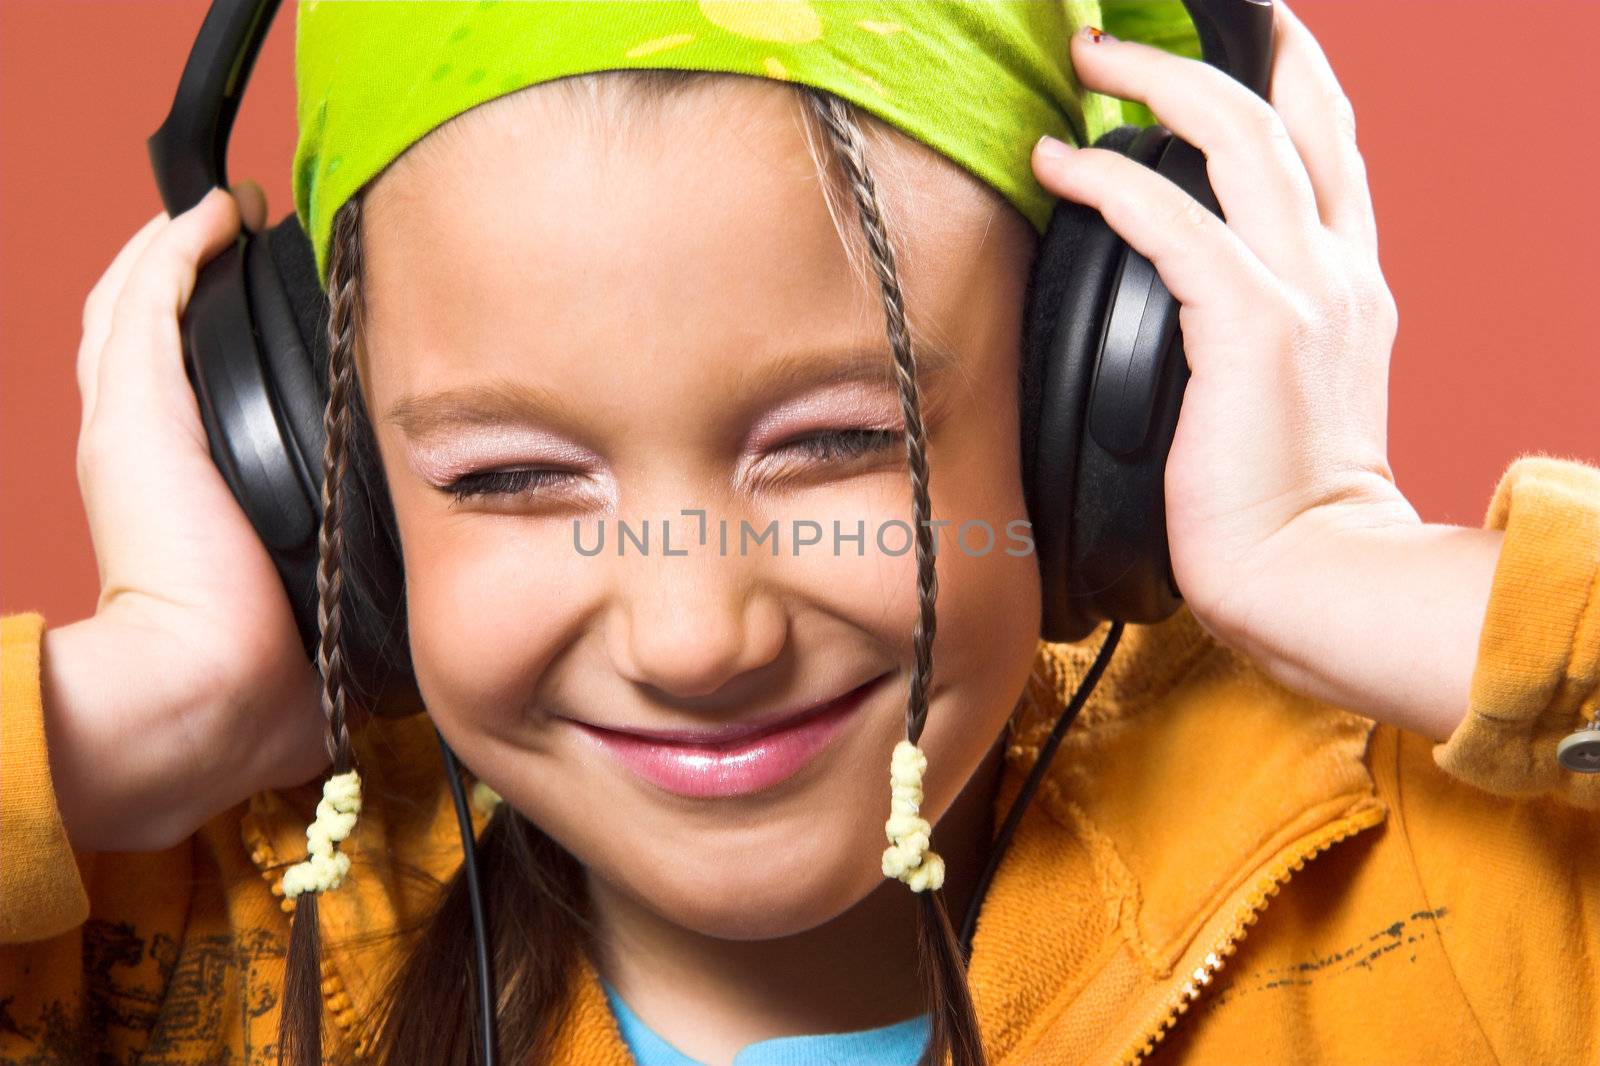 little pretty child listening music in headphones